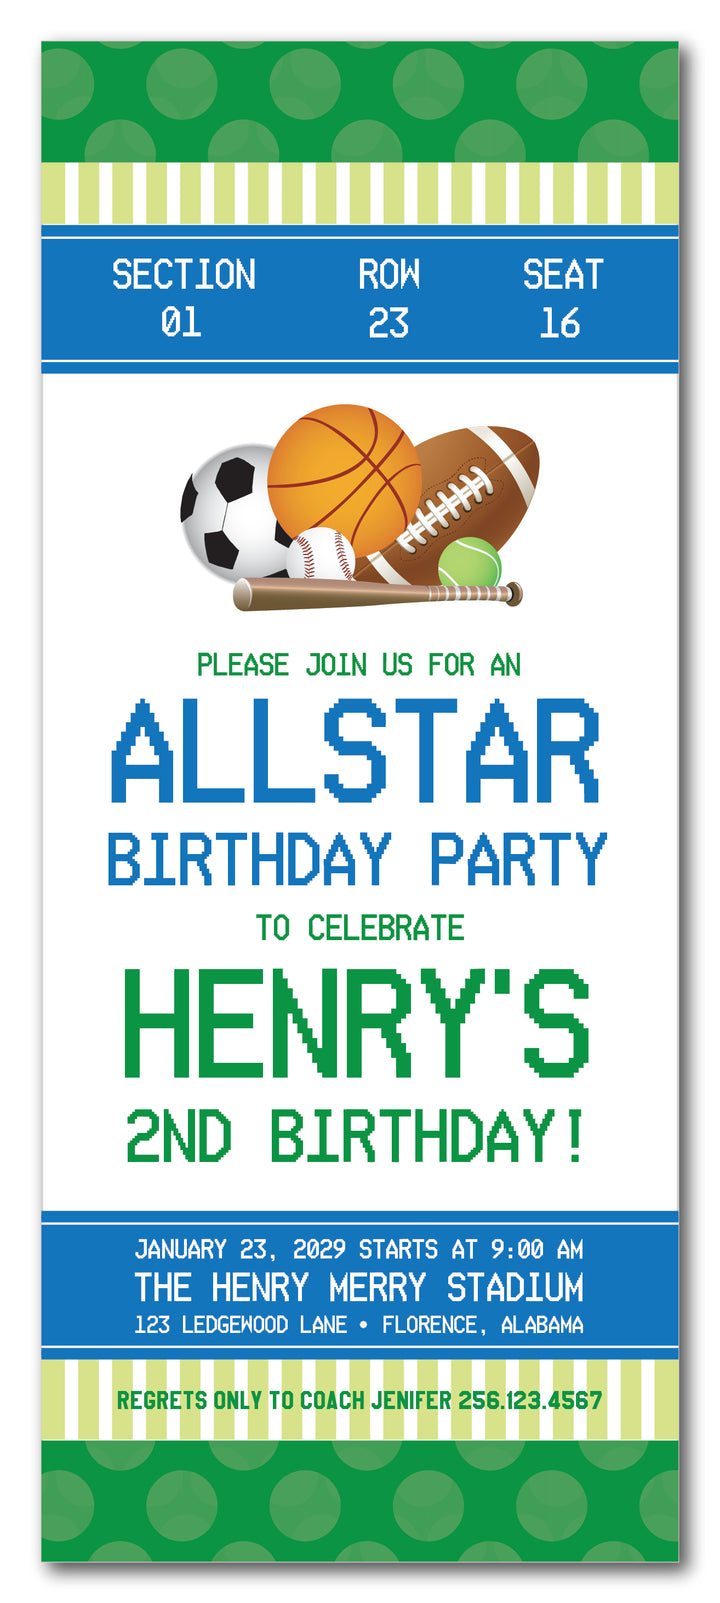 The Sports II Birthday Party Invitation